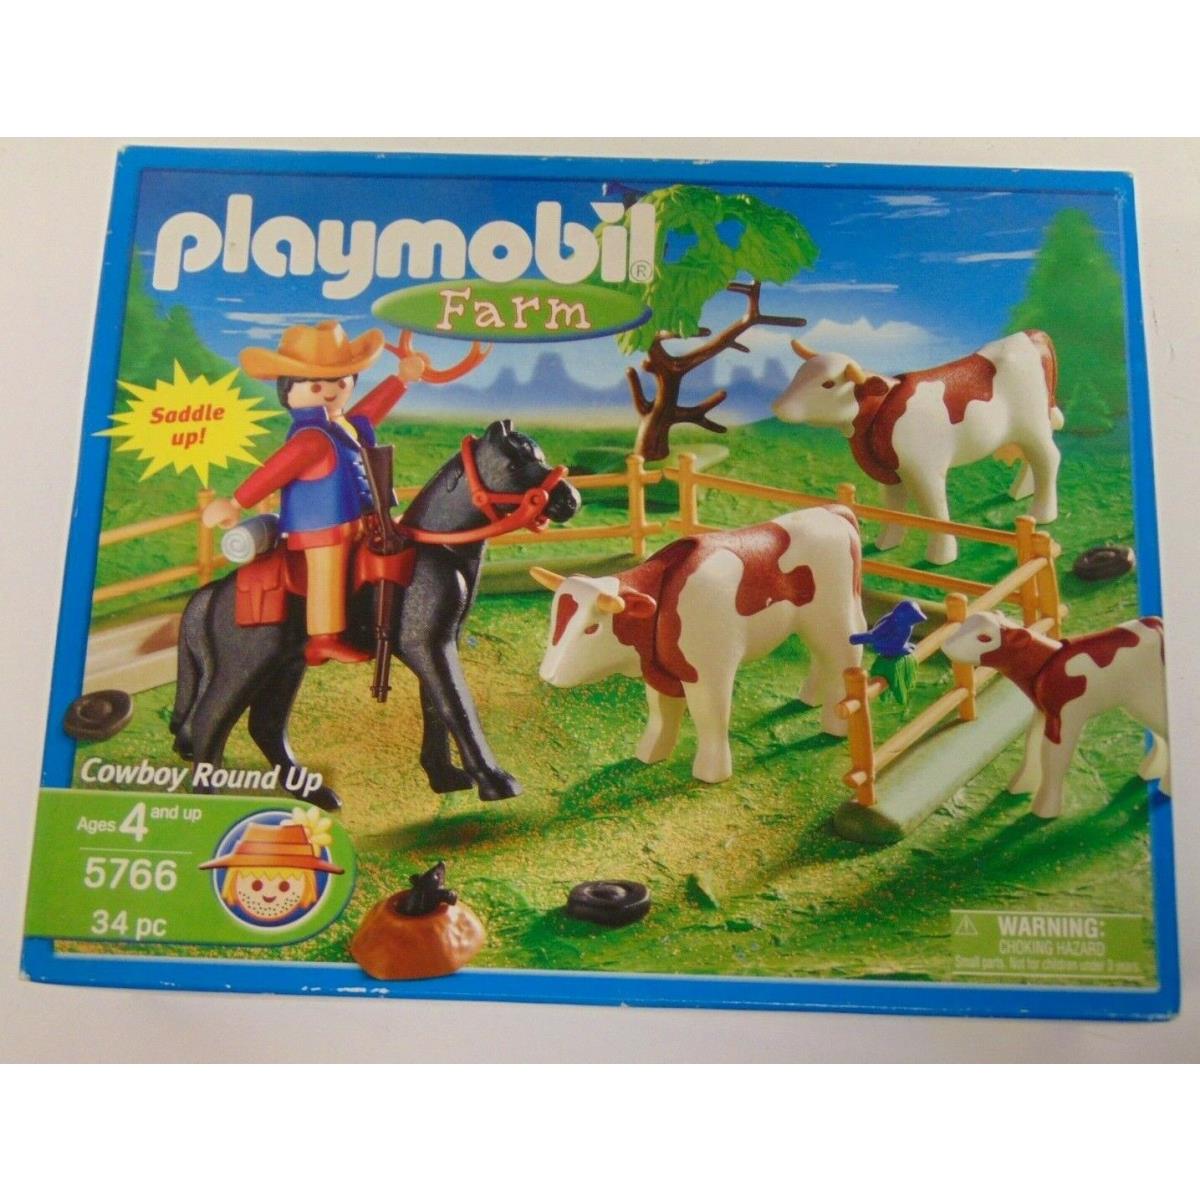 Playmobil Farm 5766 Cowboy Round Up w Cows Horse 34 pc Nrfb